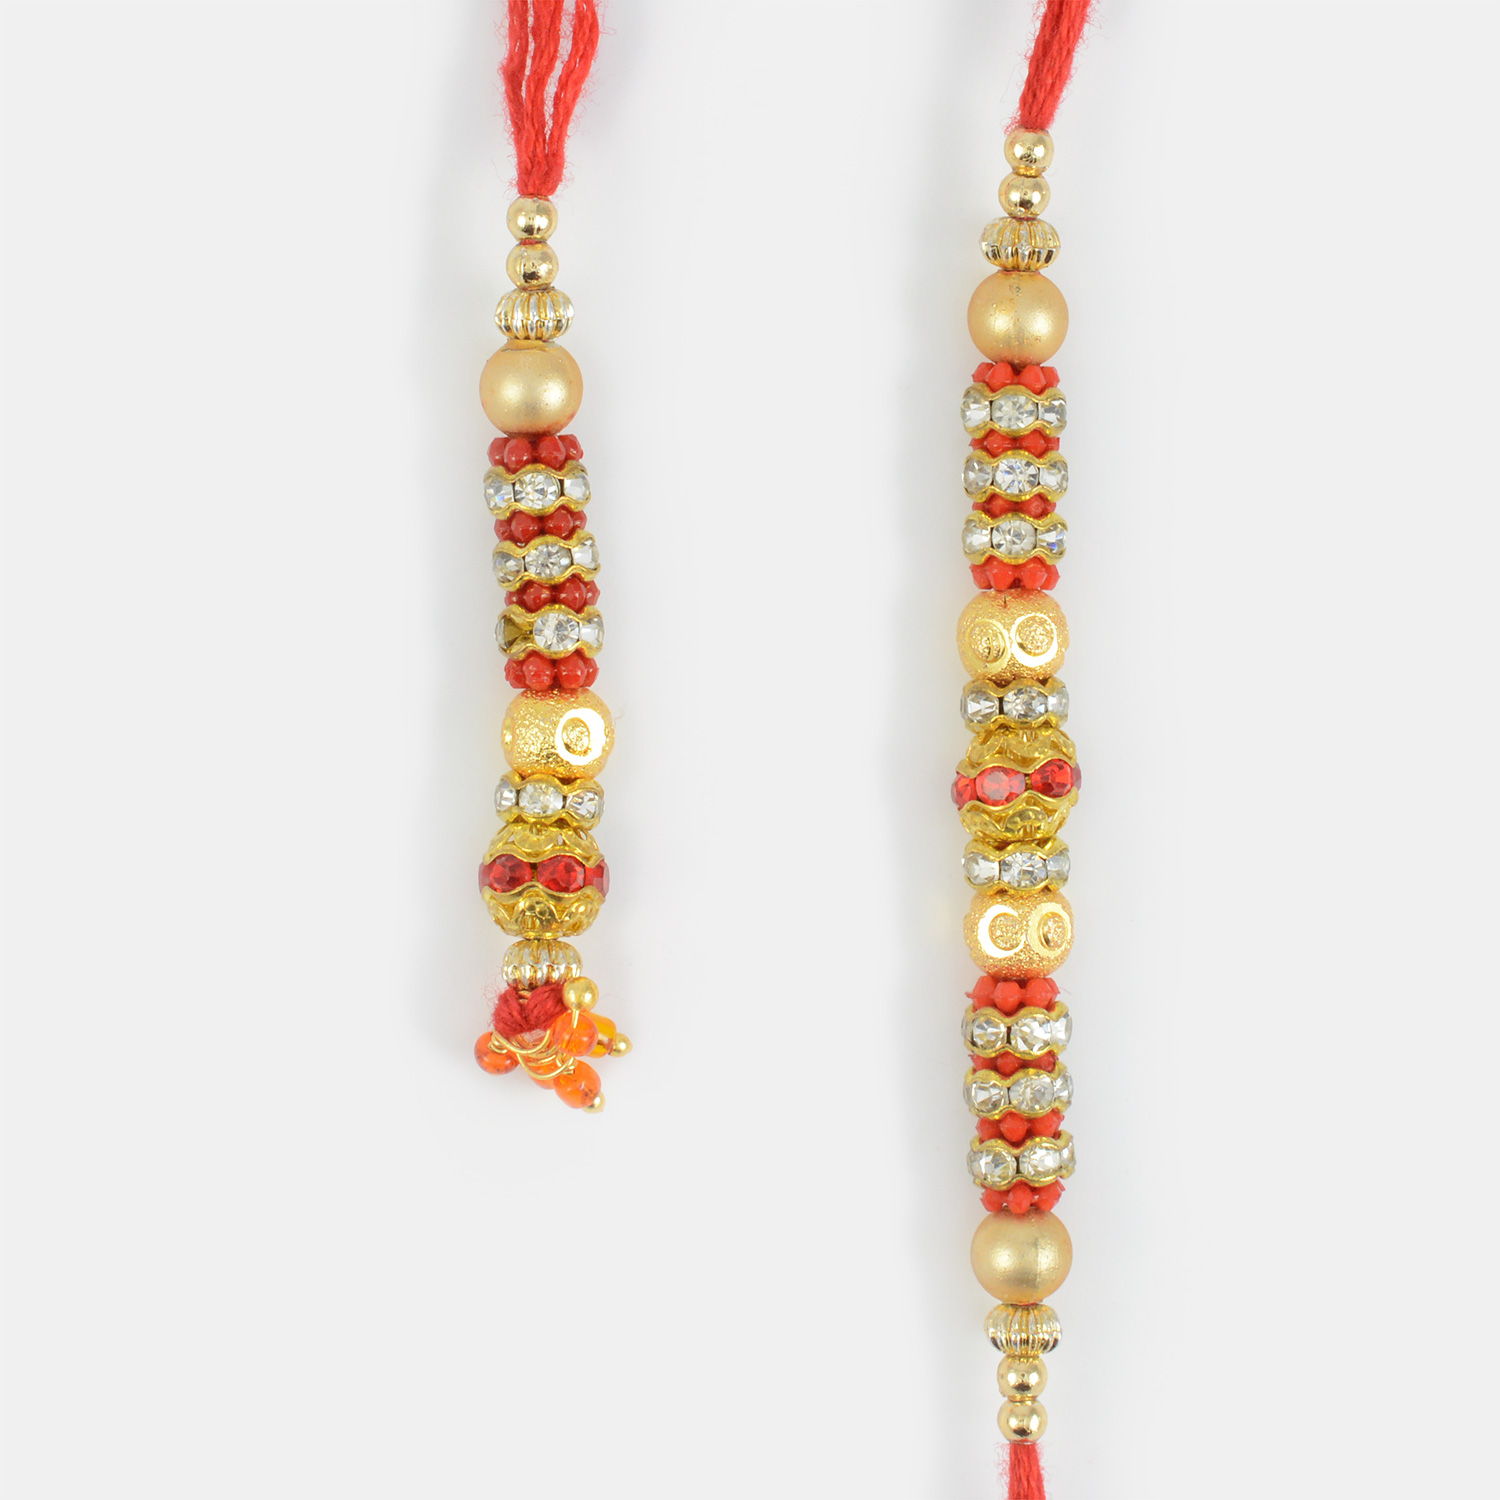 Attractive Golden Pearl and Beads Diamond Rakhi Pair